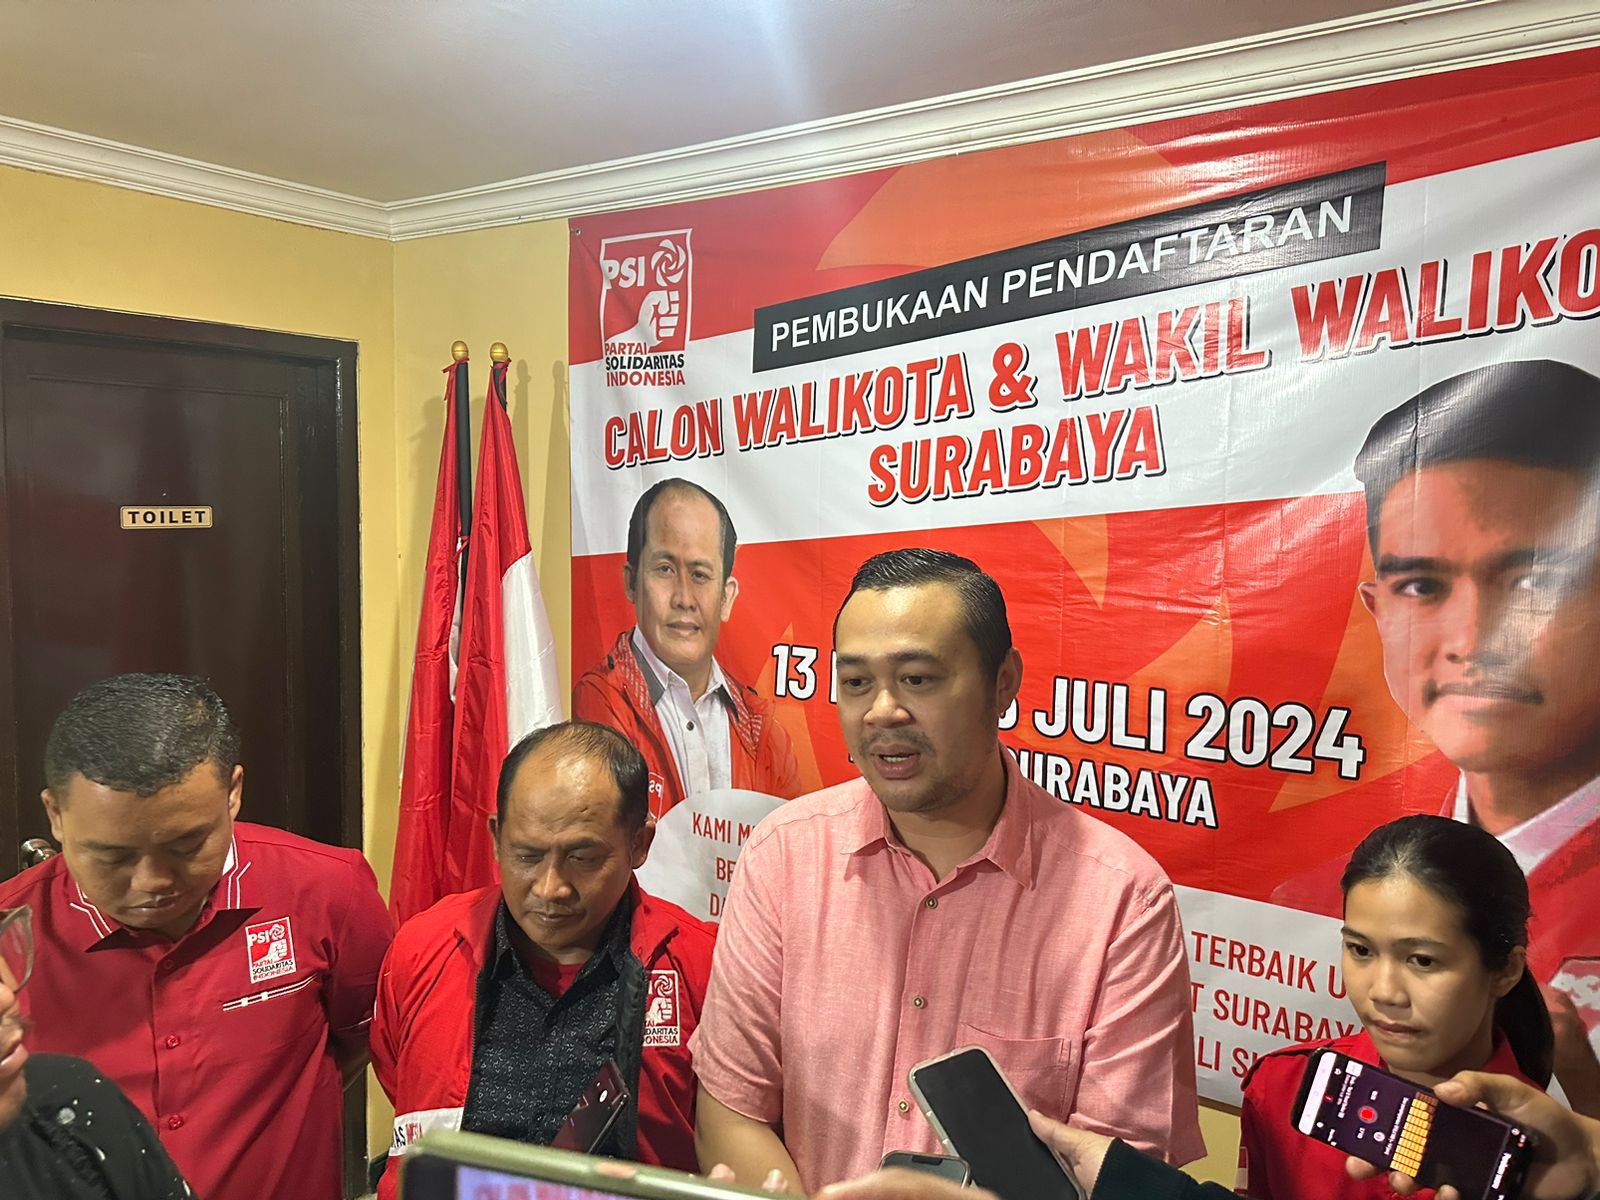 Daftar Bacawali Surabaya di PSI, Ketua Projo Jatim Janji Bangun Surabaya  Lebih Hebat dan Maju